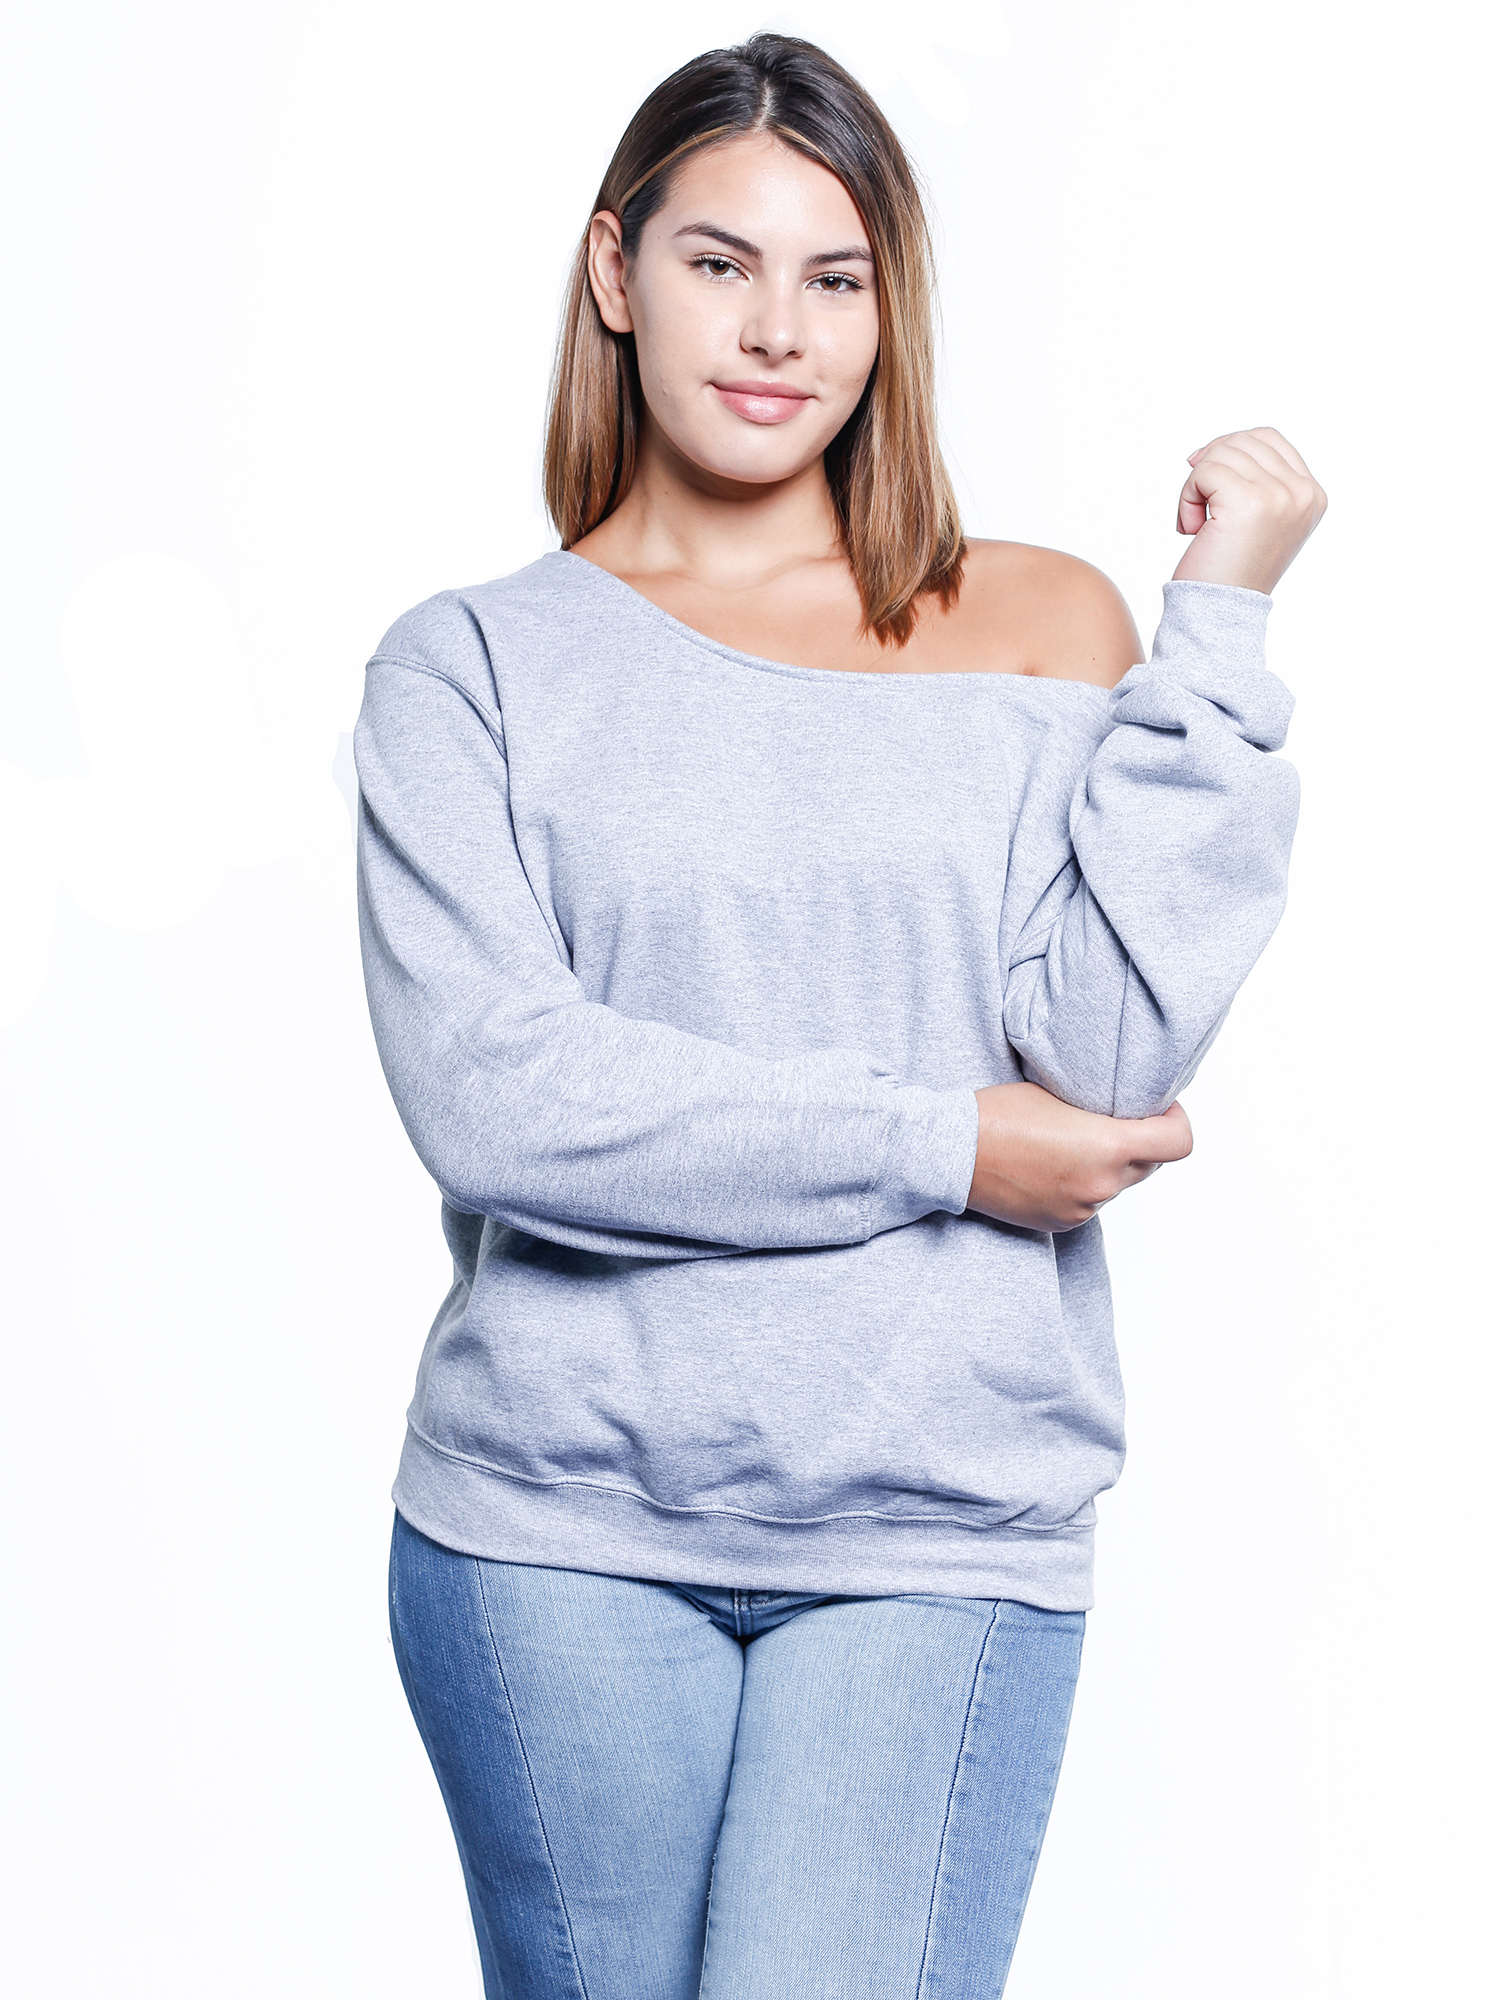 Awkward Styles Off The Shoulder Sweatshirt Women's Oversized Sweater Plus Size Clothing for Women Off Shoulder Tops for Women Curvy Women's Sweatshirt Loose Sweaters for Women Plus Size 80s Sweater - image 1 of 5